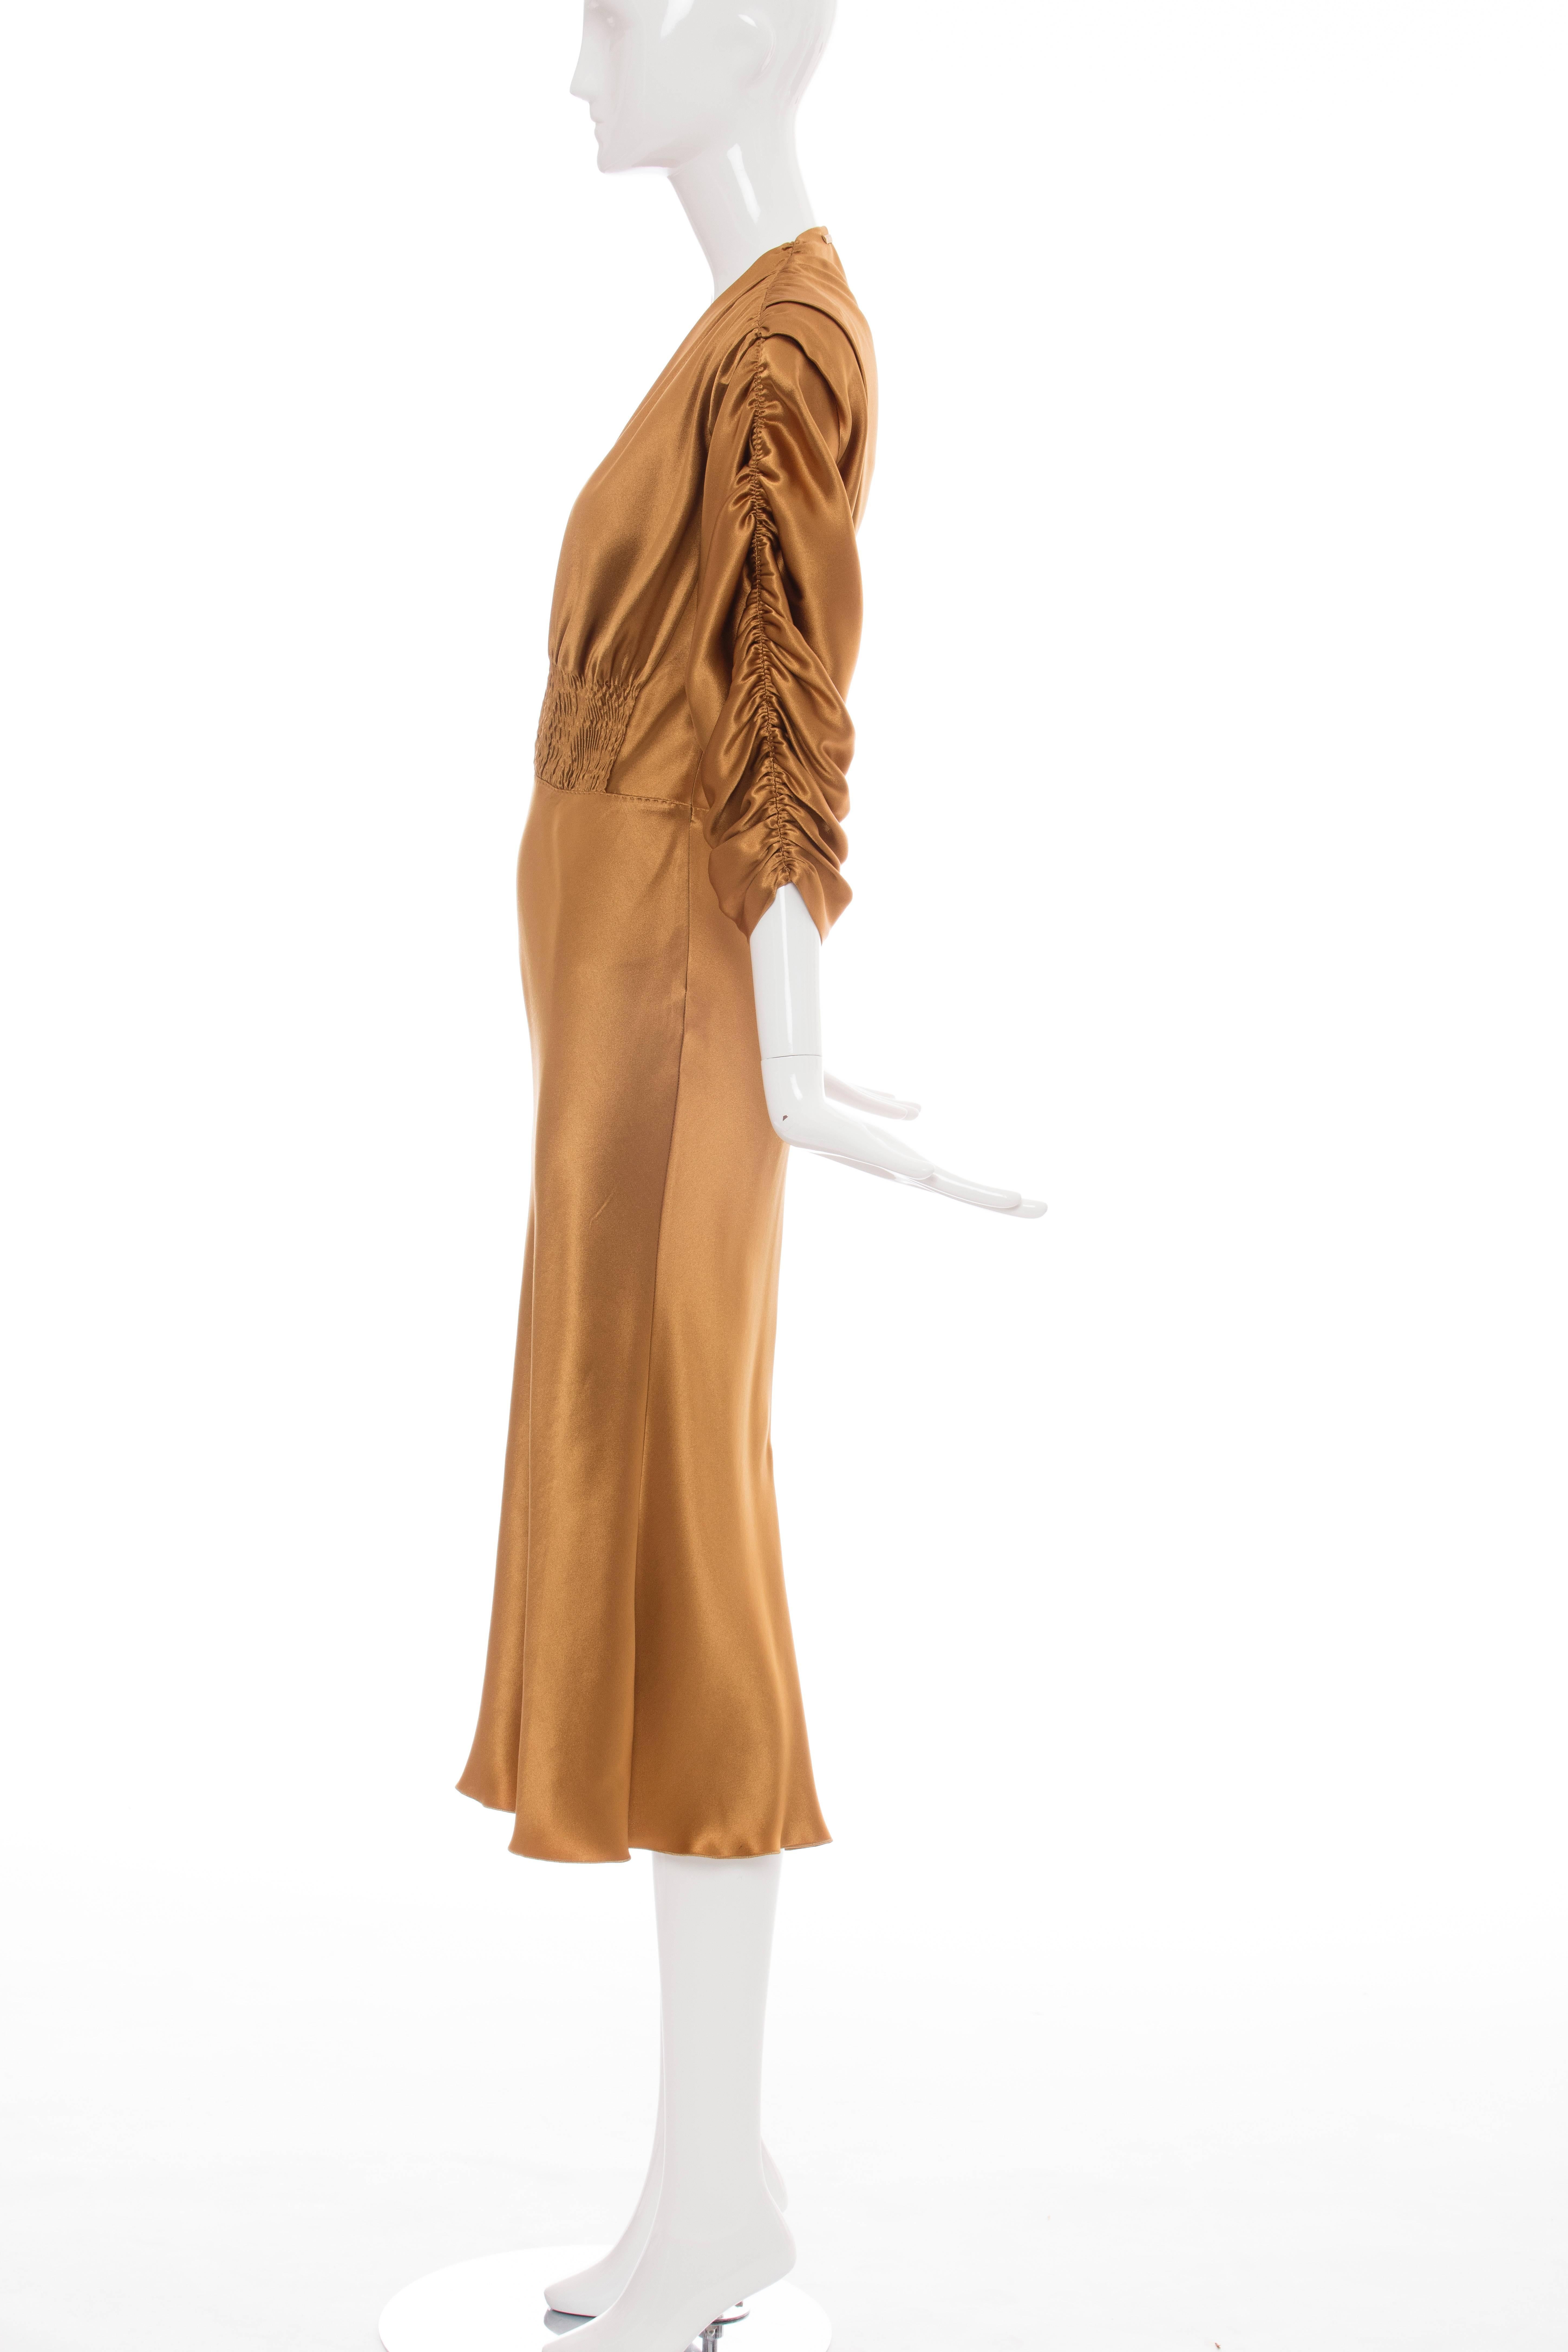 Brown Jean Paul Gaultier Silk Charmeuse Dress, Circa 1990s